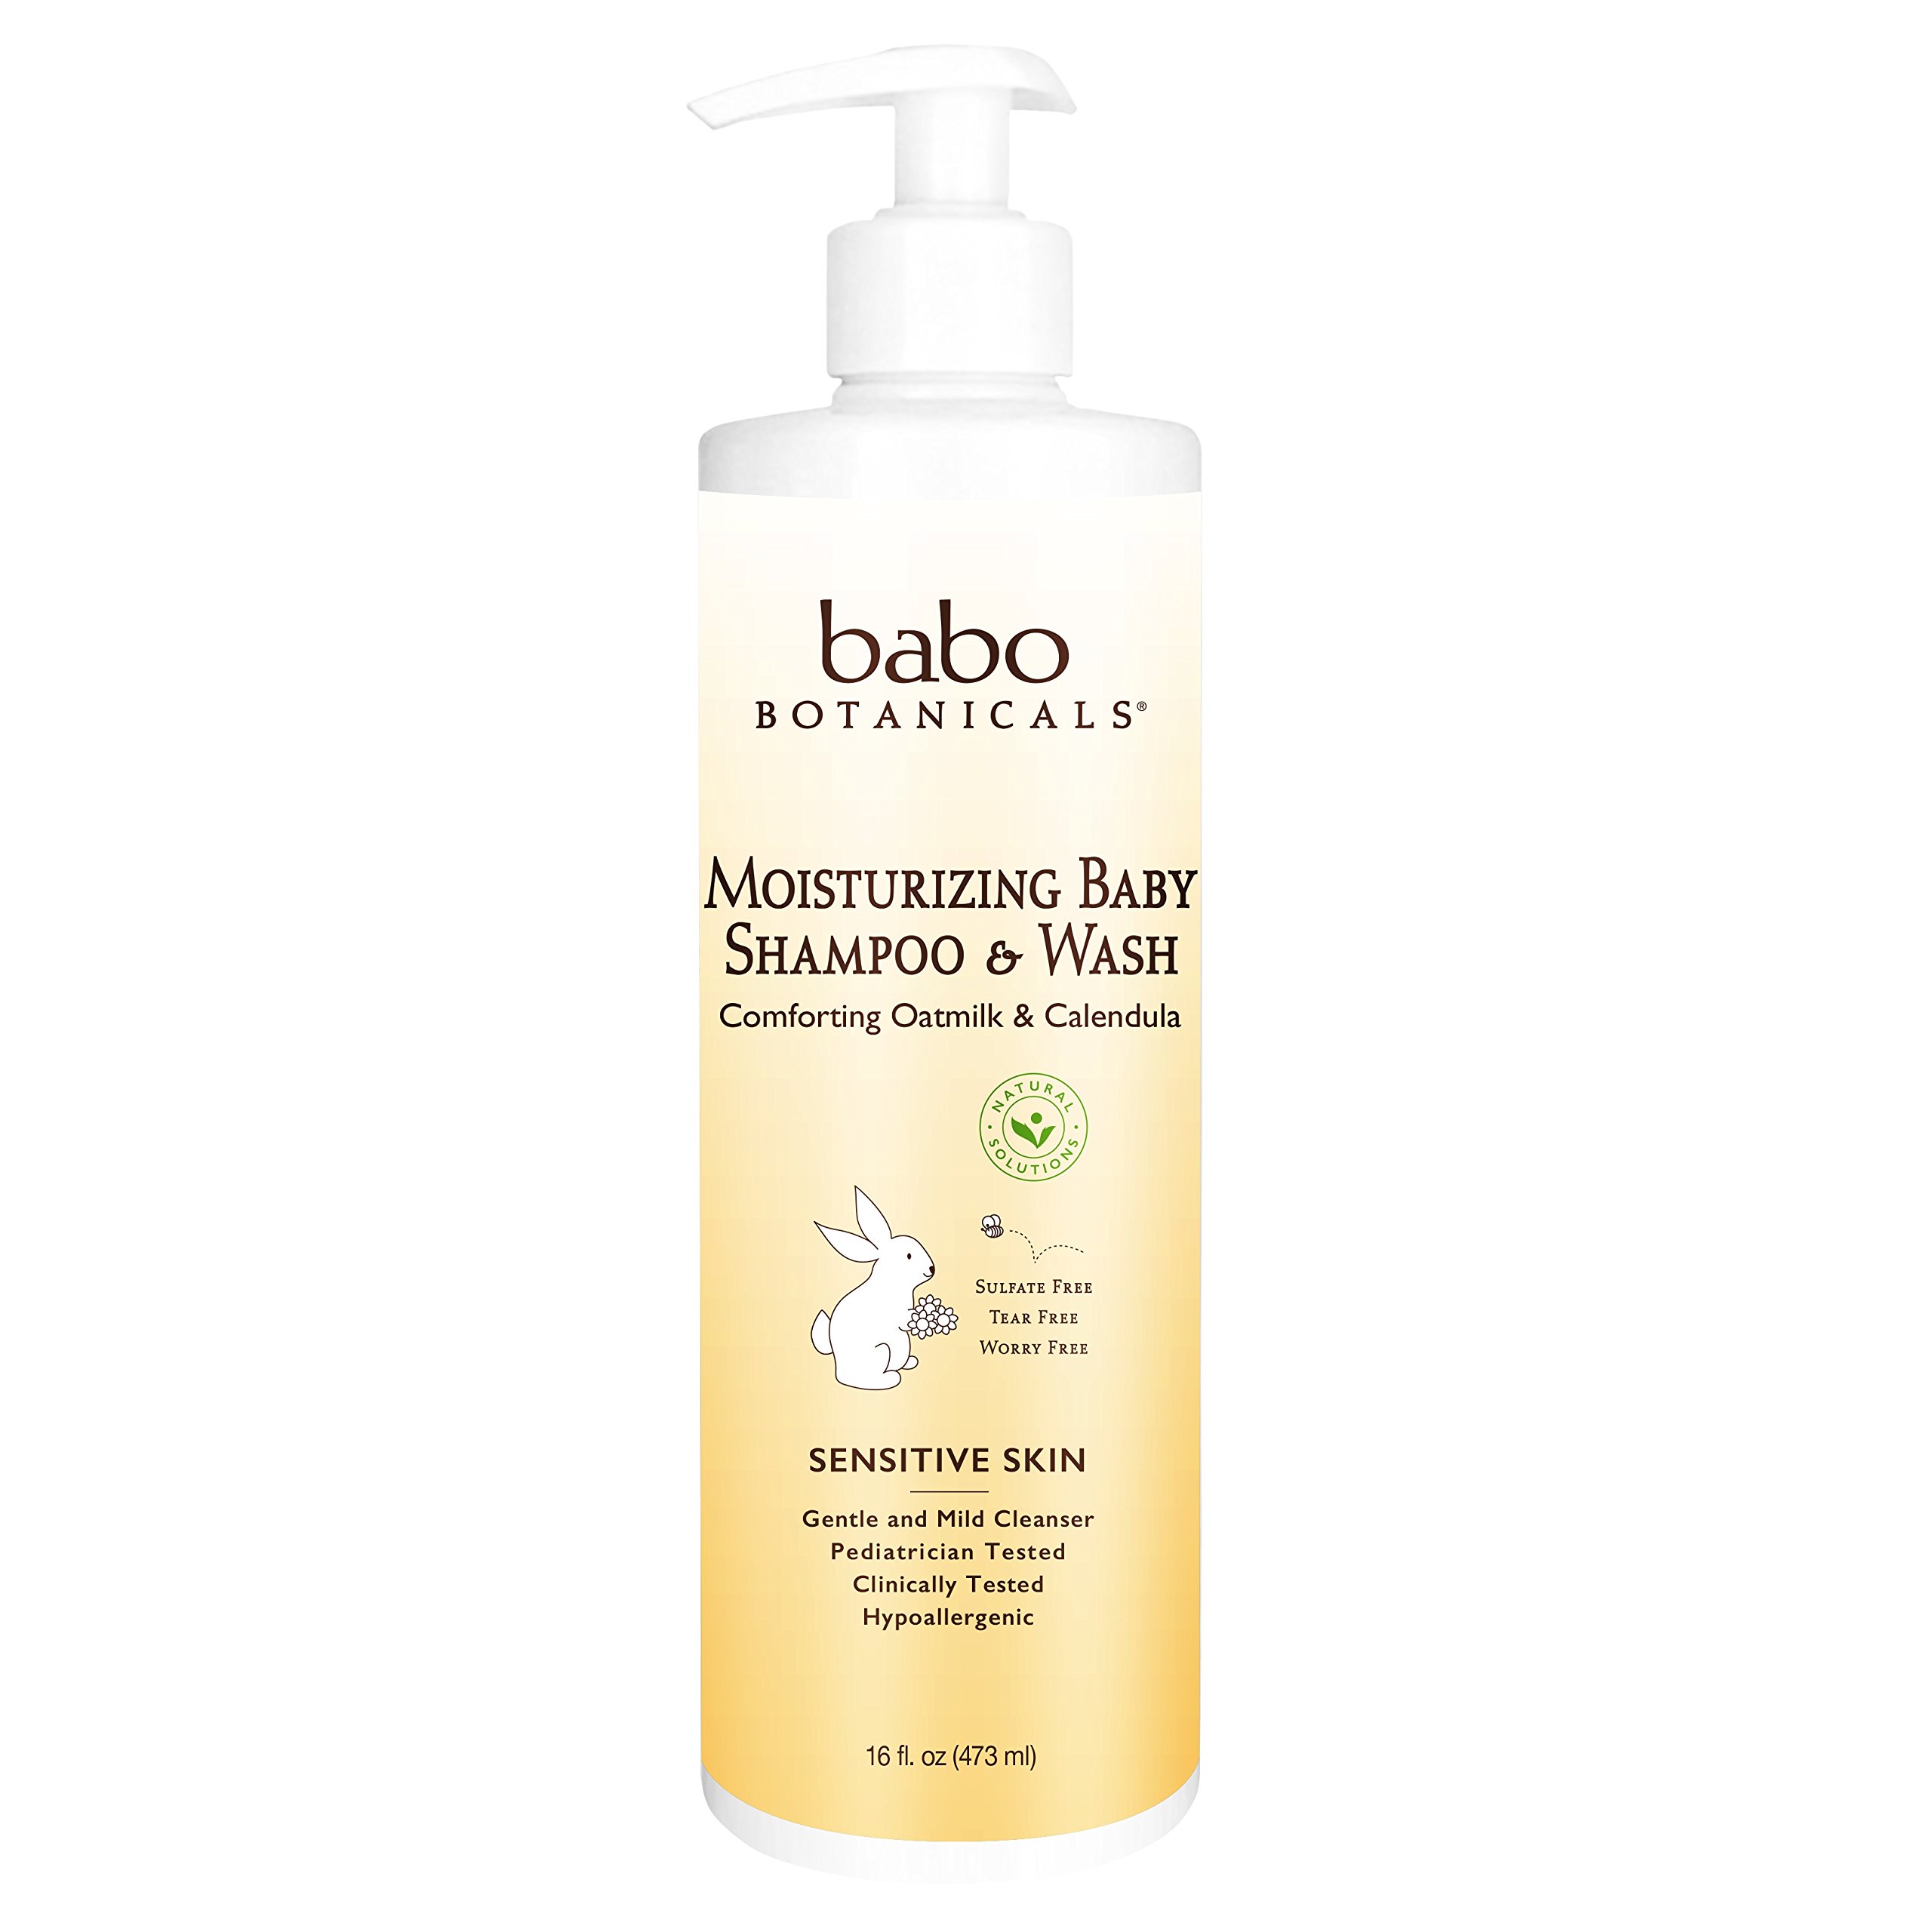 babo botanicals baby shampoo review